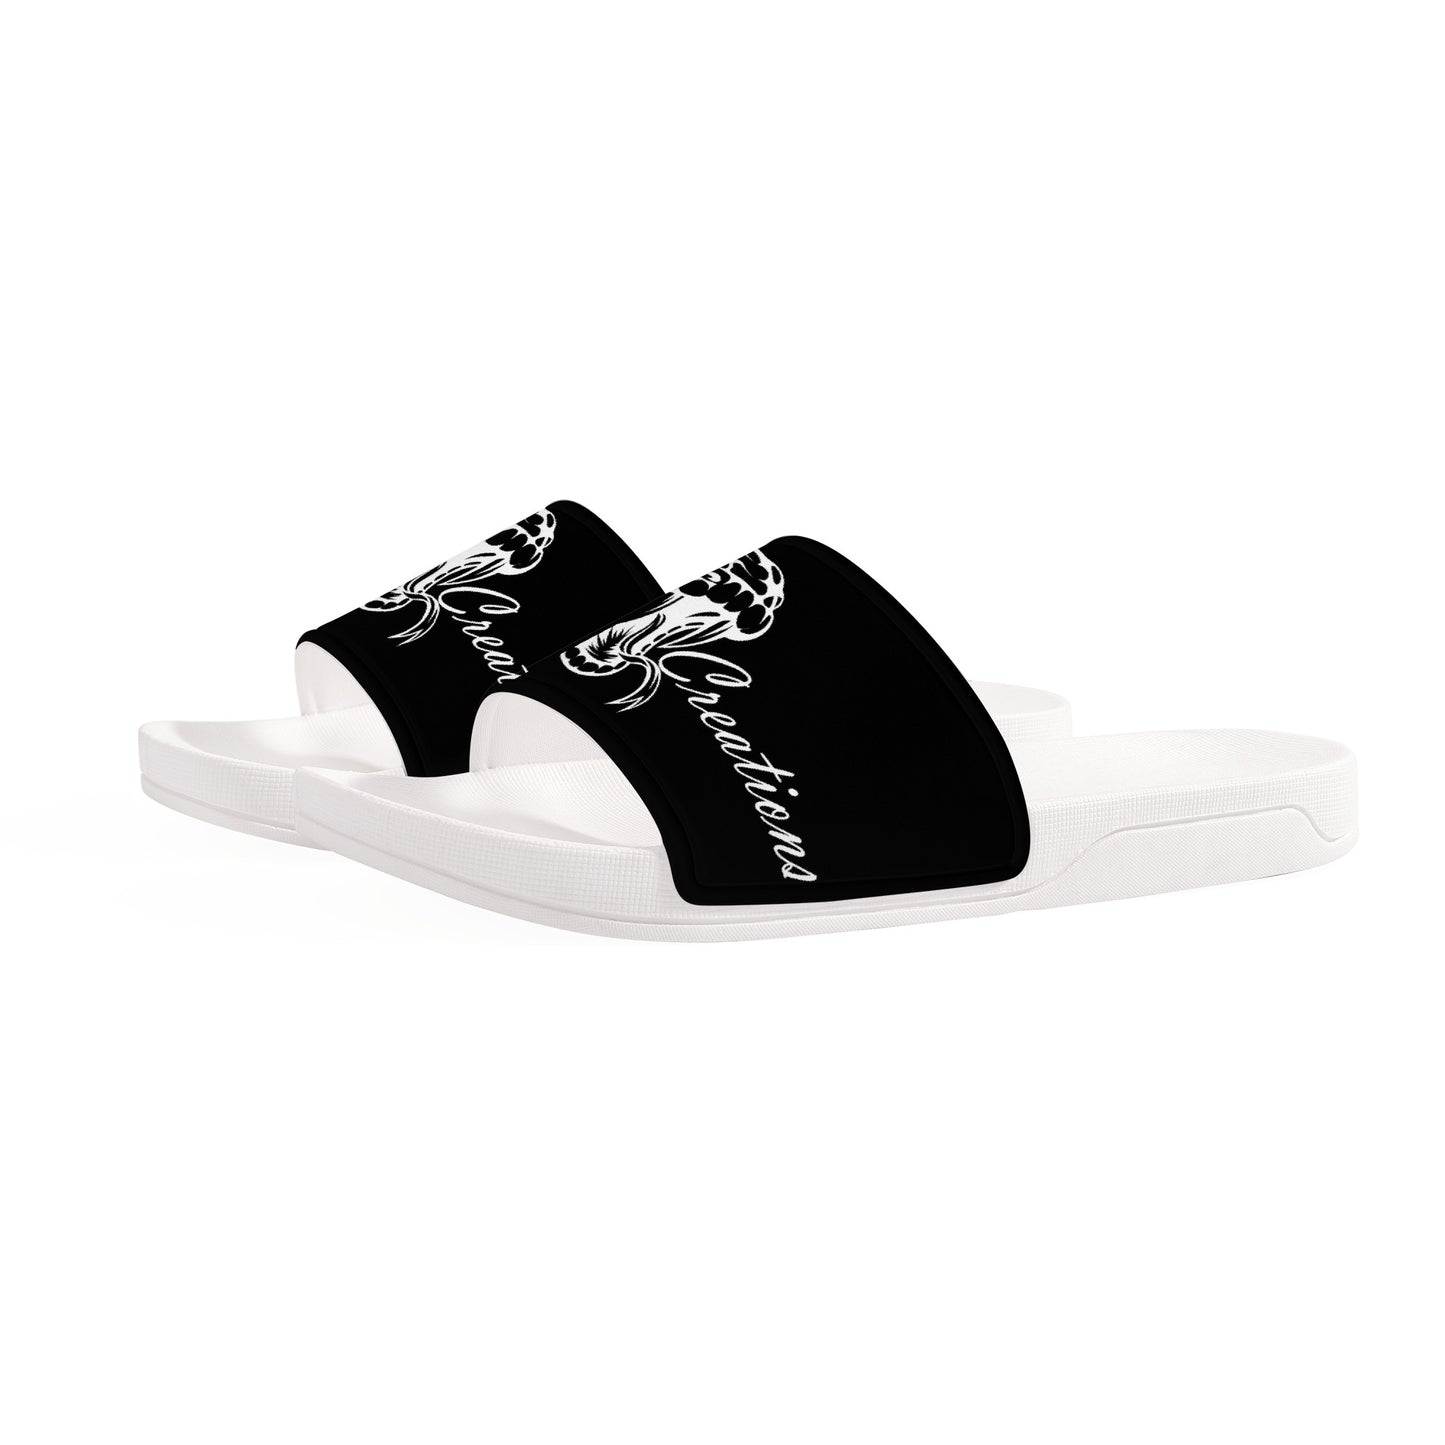 Cryptic Slide Sandals, Black